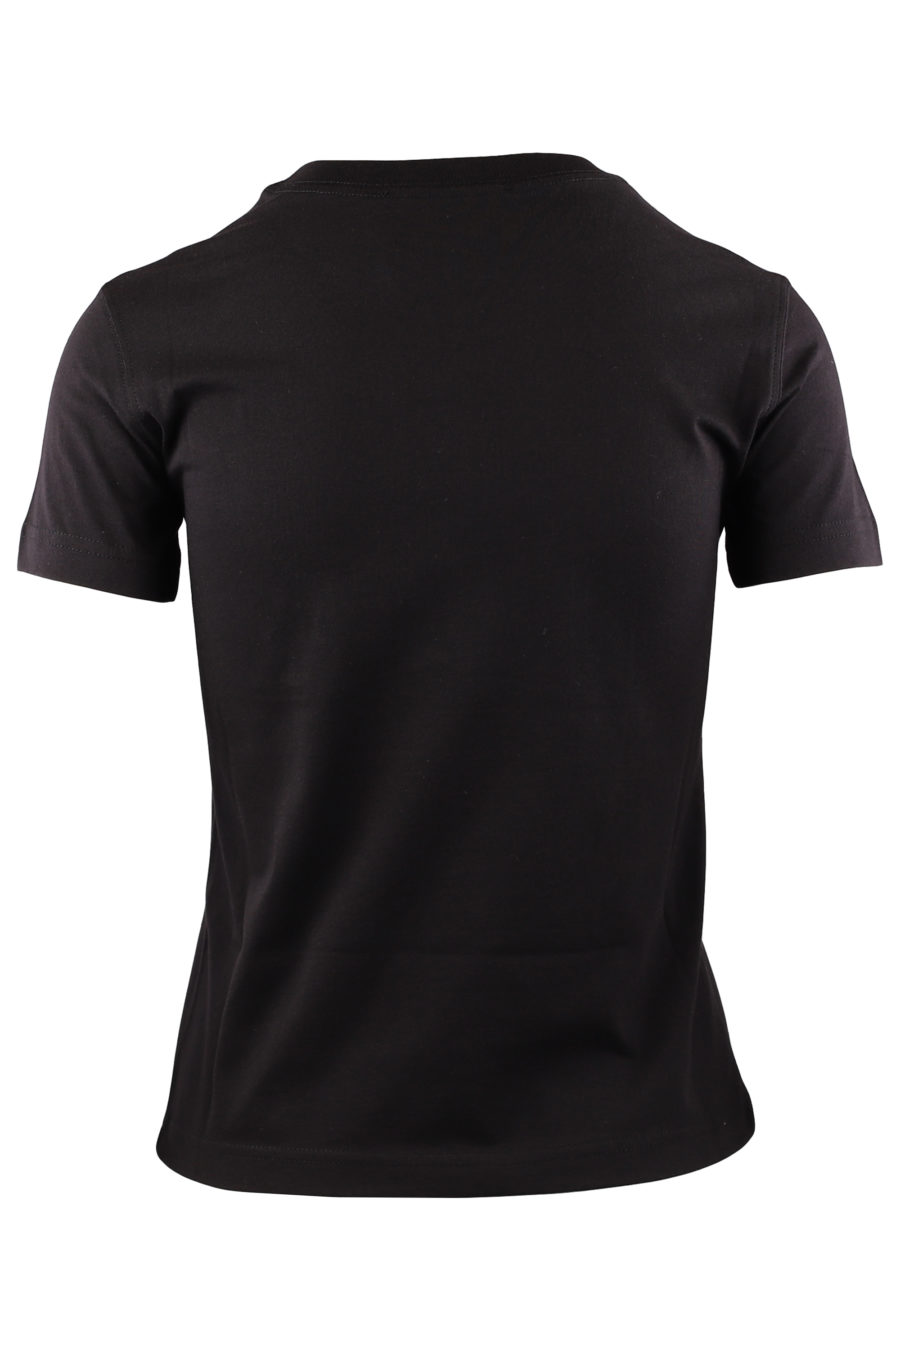 Camiseta negra con logotipo multicolor - f6bc7b034cd89d2363ce91a07b7a01ba3b0d21c8